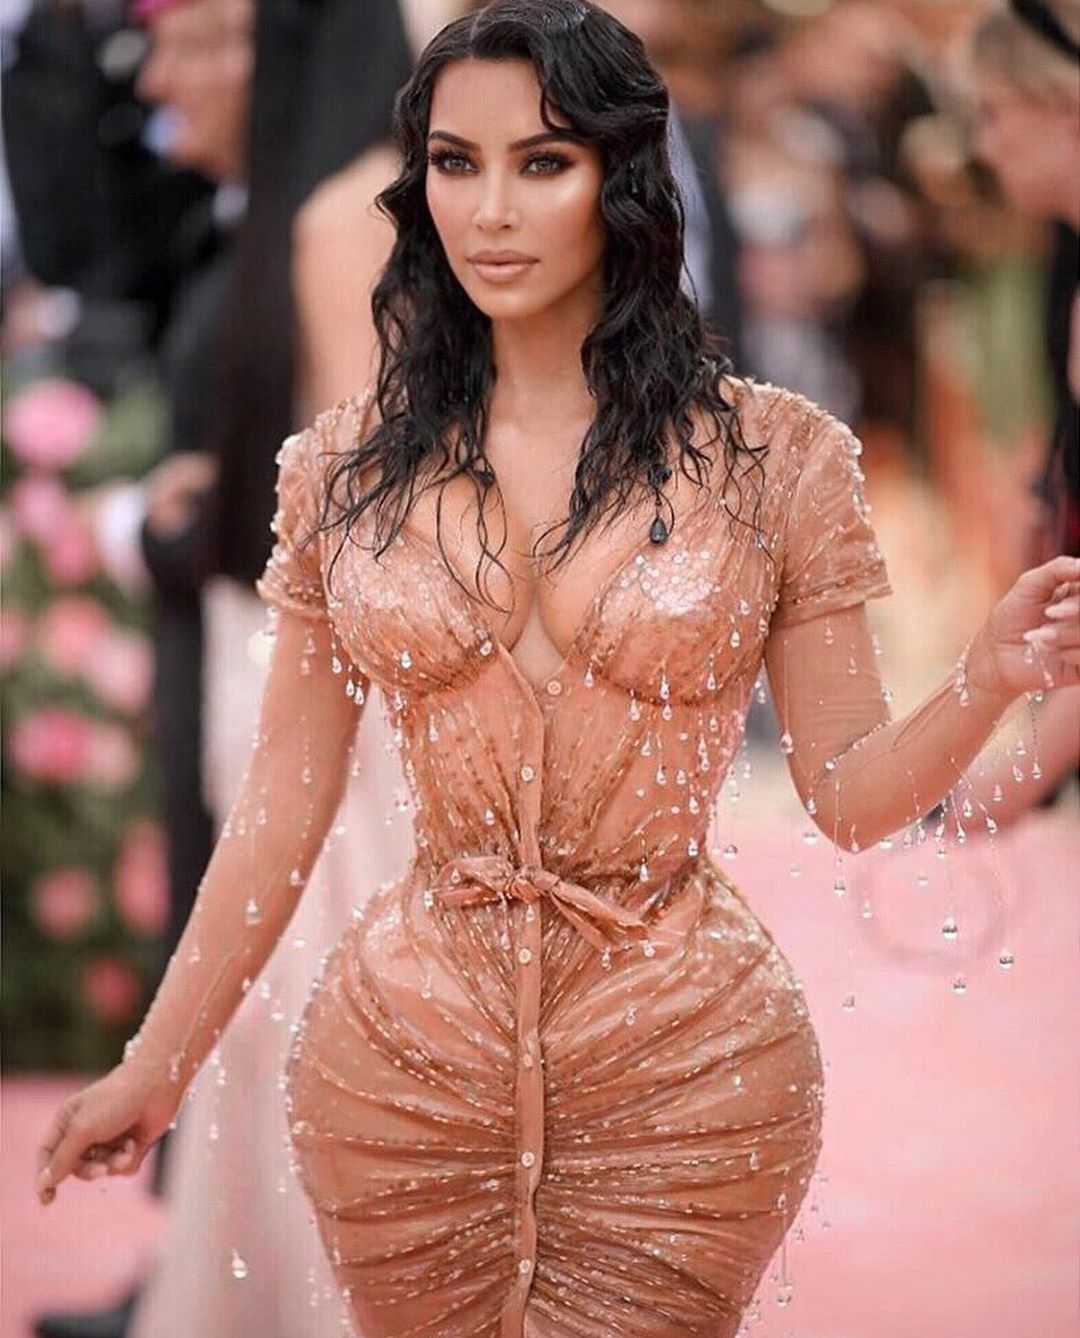 Did Kim Kardashian undergo surgery to fit into her MET